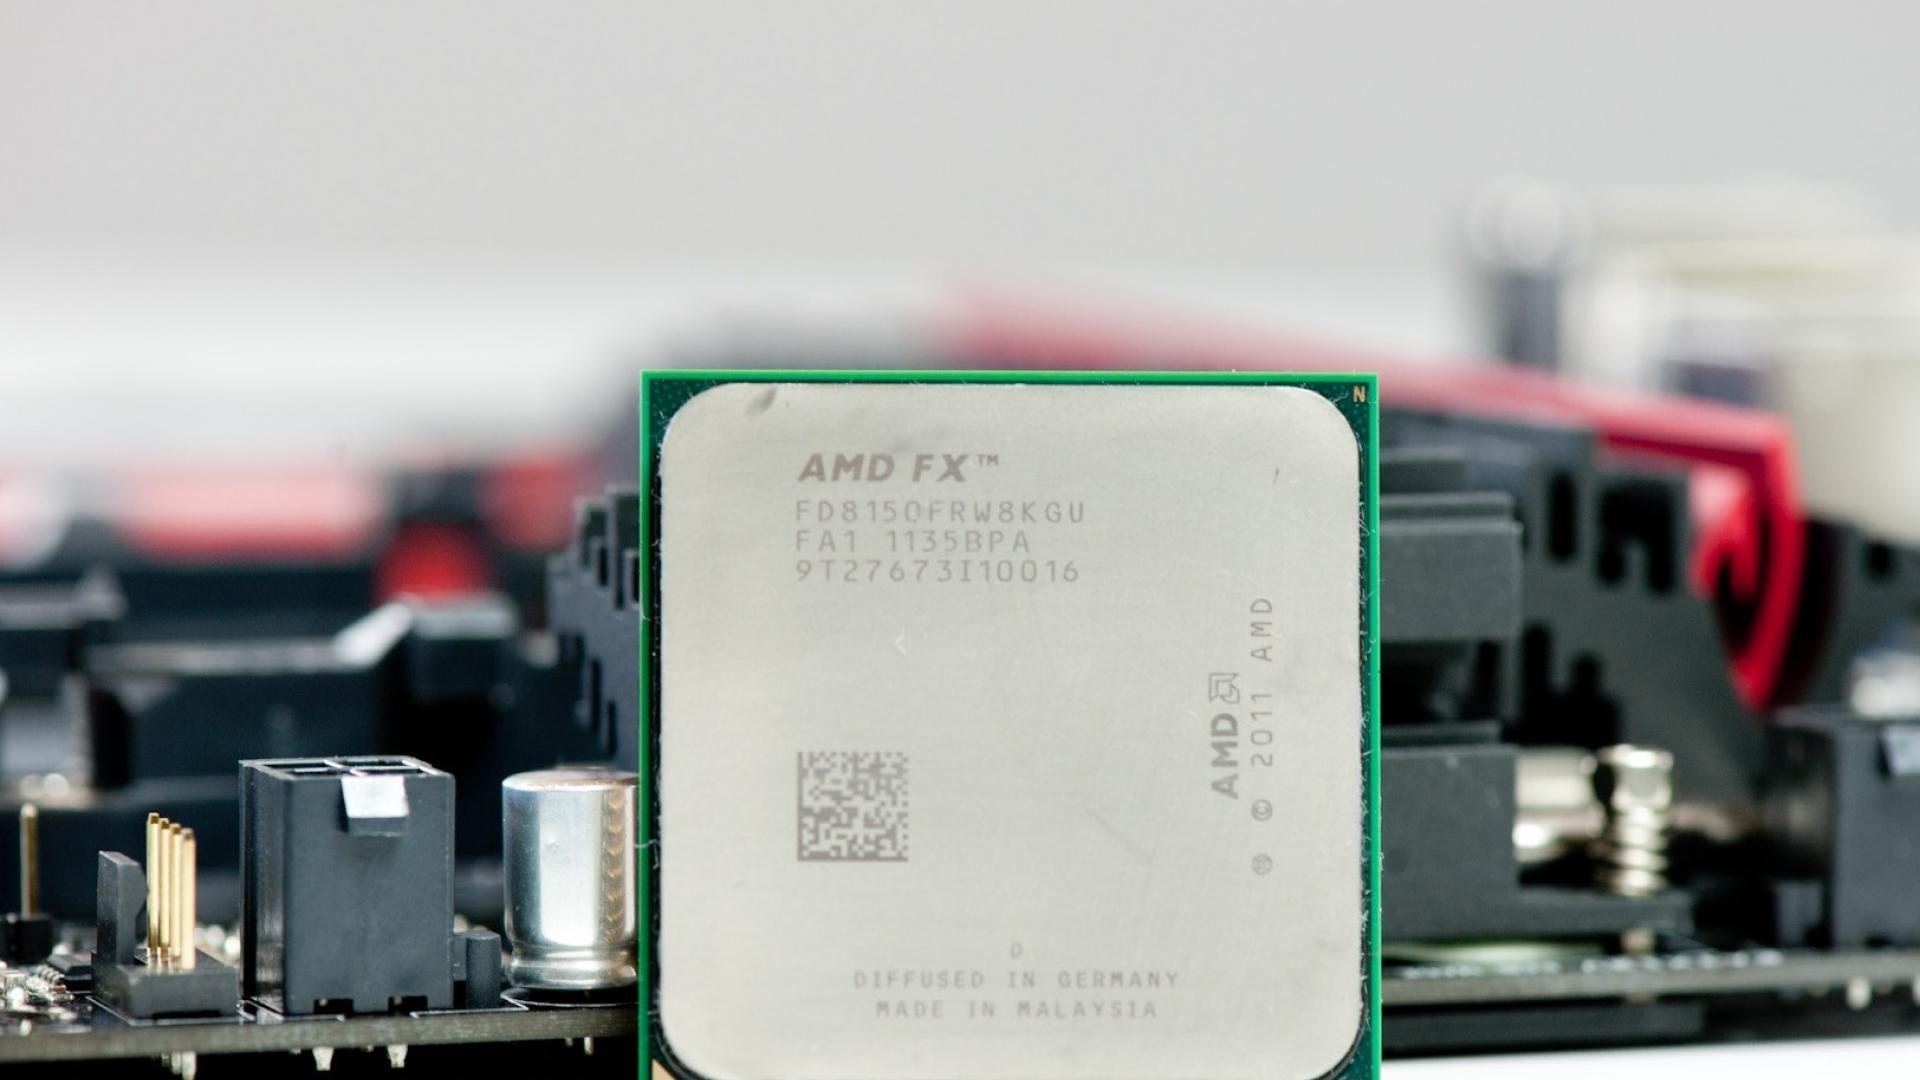 AMD FX-6200 Zambezi am3+, 6 x 3800 МГЦ. * AMD FX-Series (Bulldozer).. FX-6200 Series. AMD FX-6200 фото. Amd tune